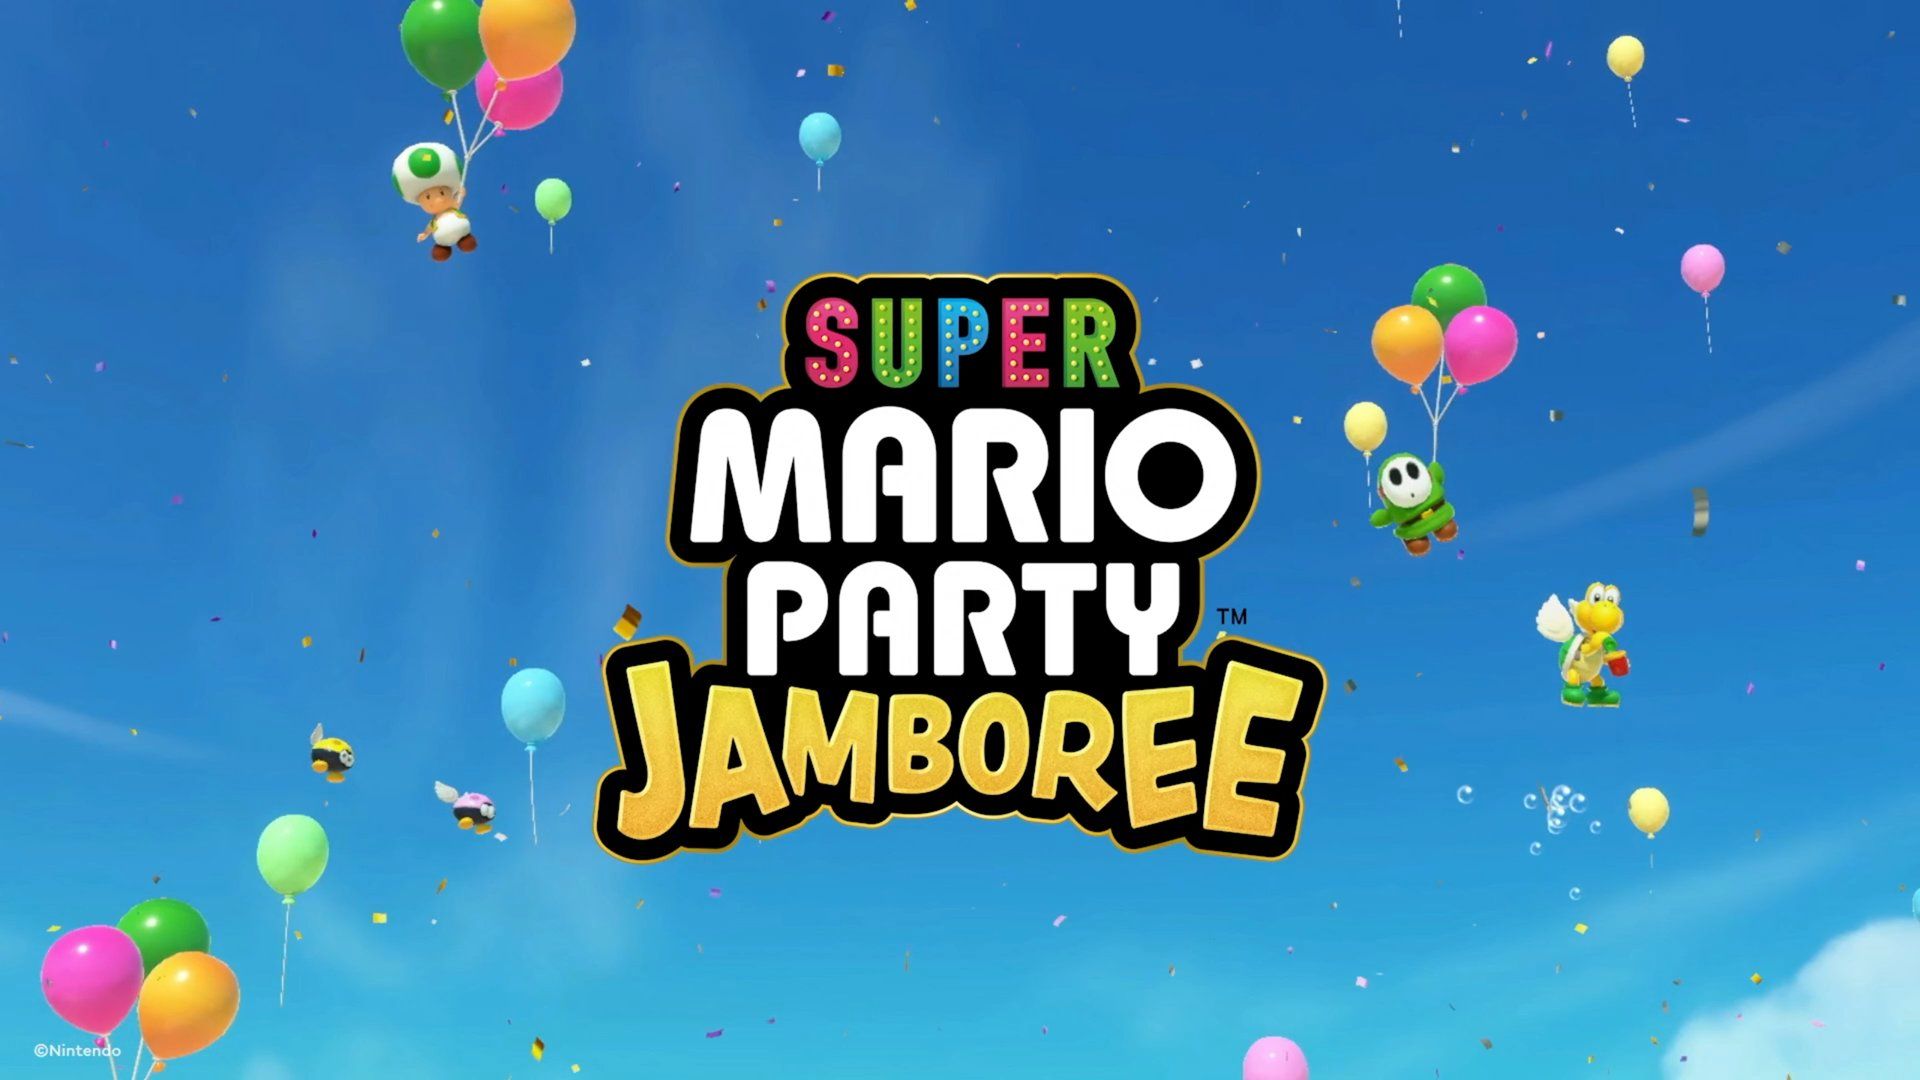 super-mario-party-jamboree-logo-key-art